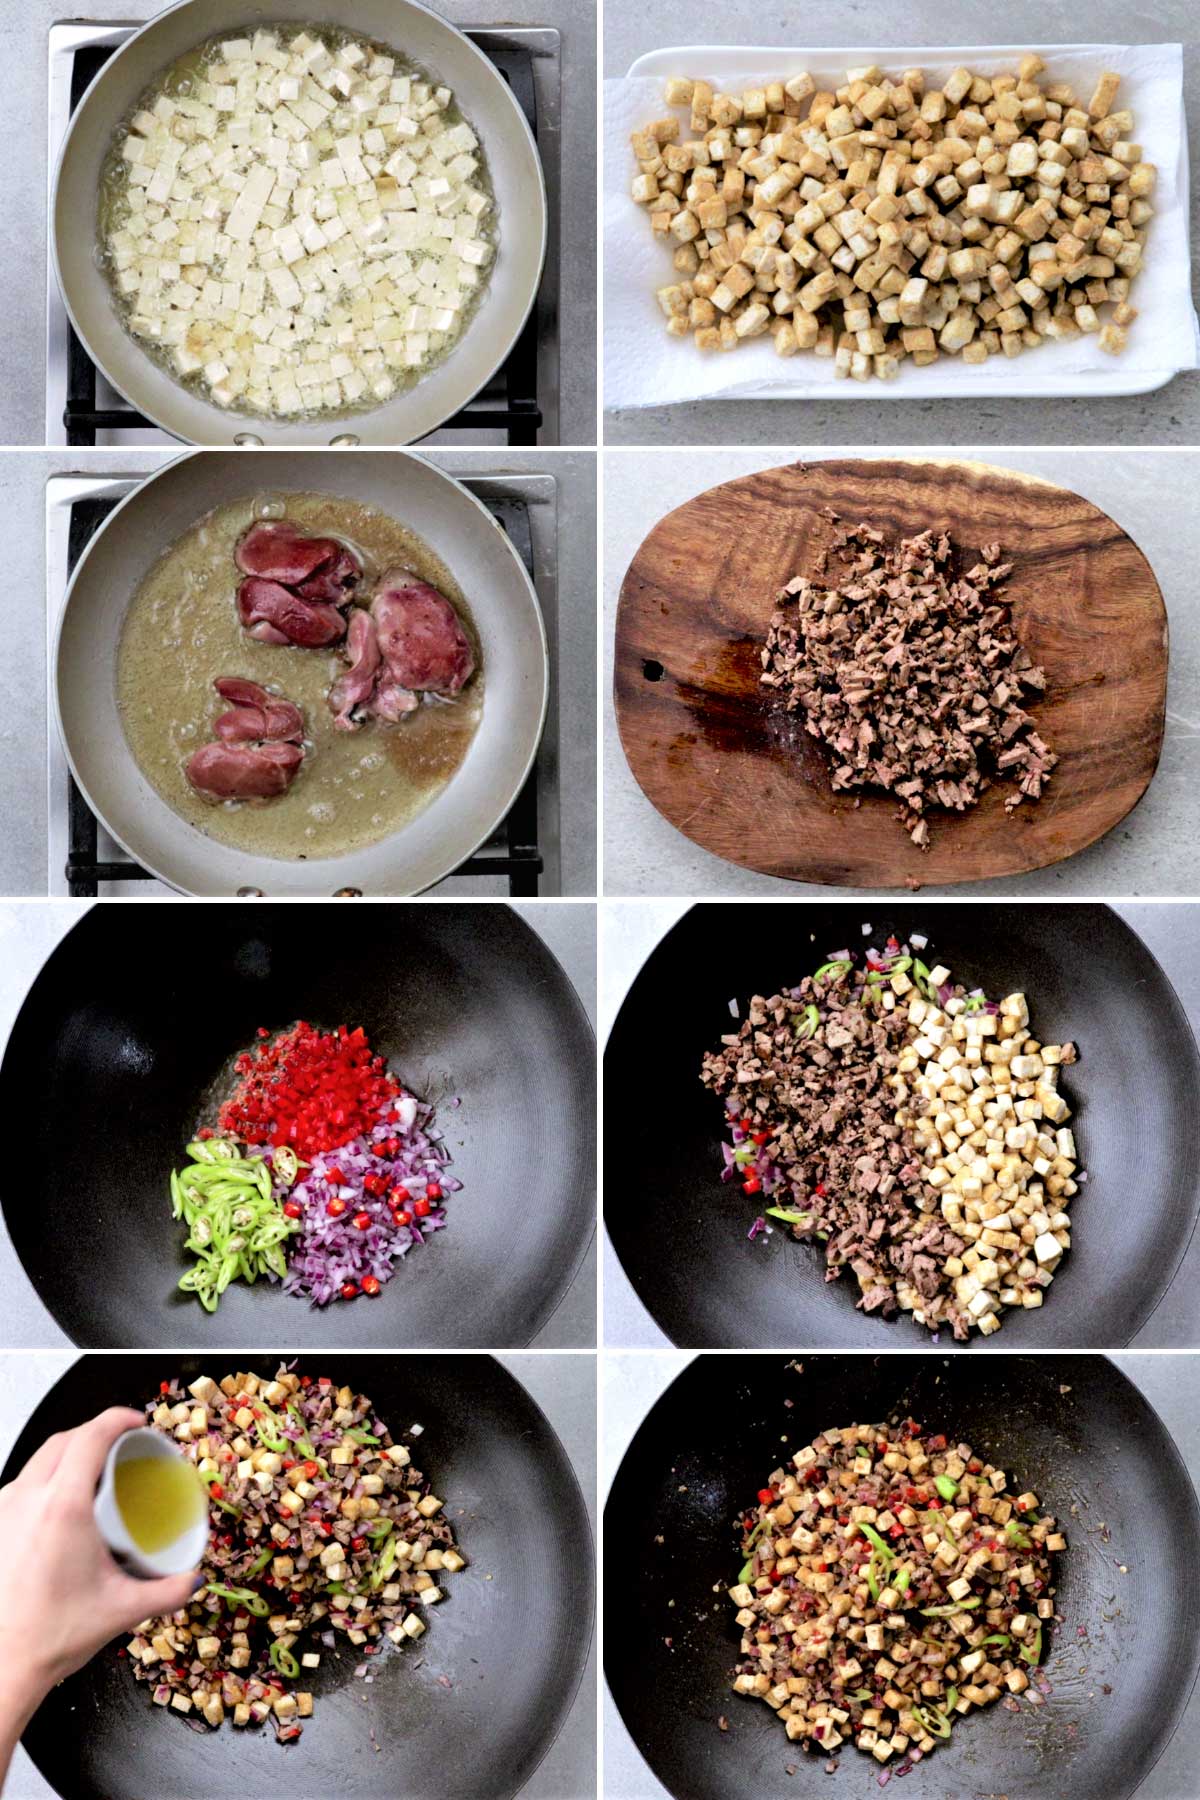 Steps on how to cook Tofu Sisig.